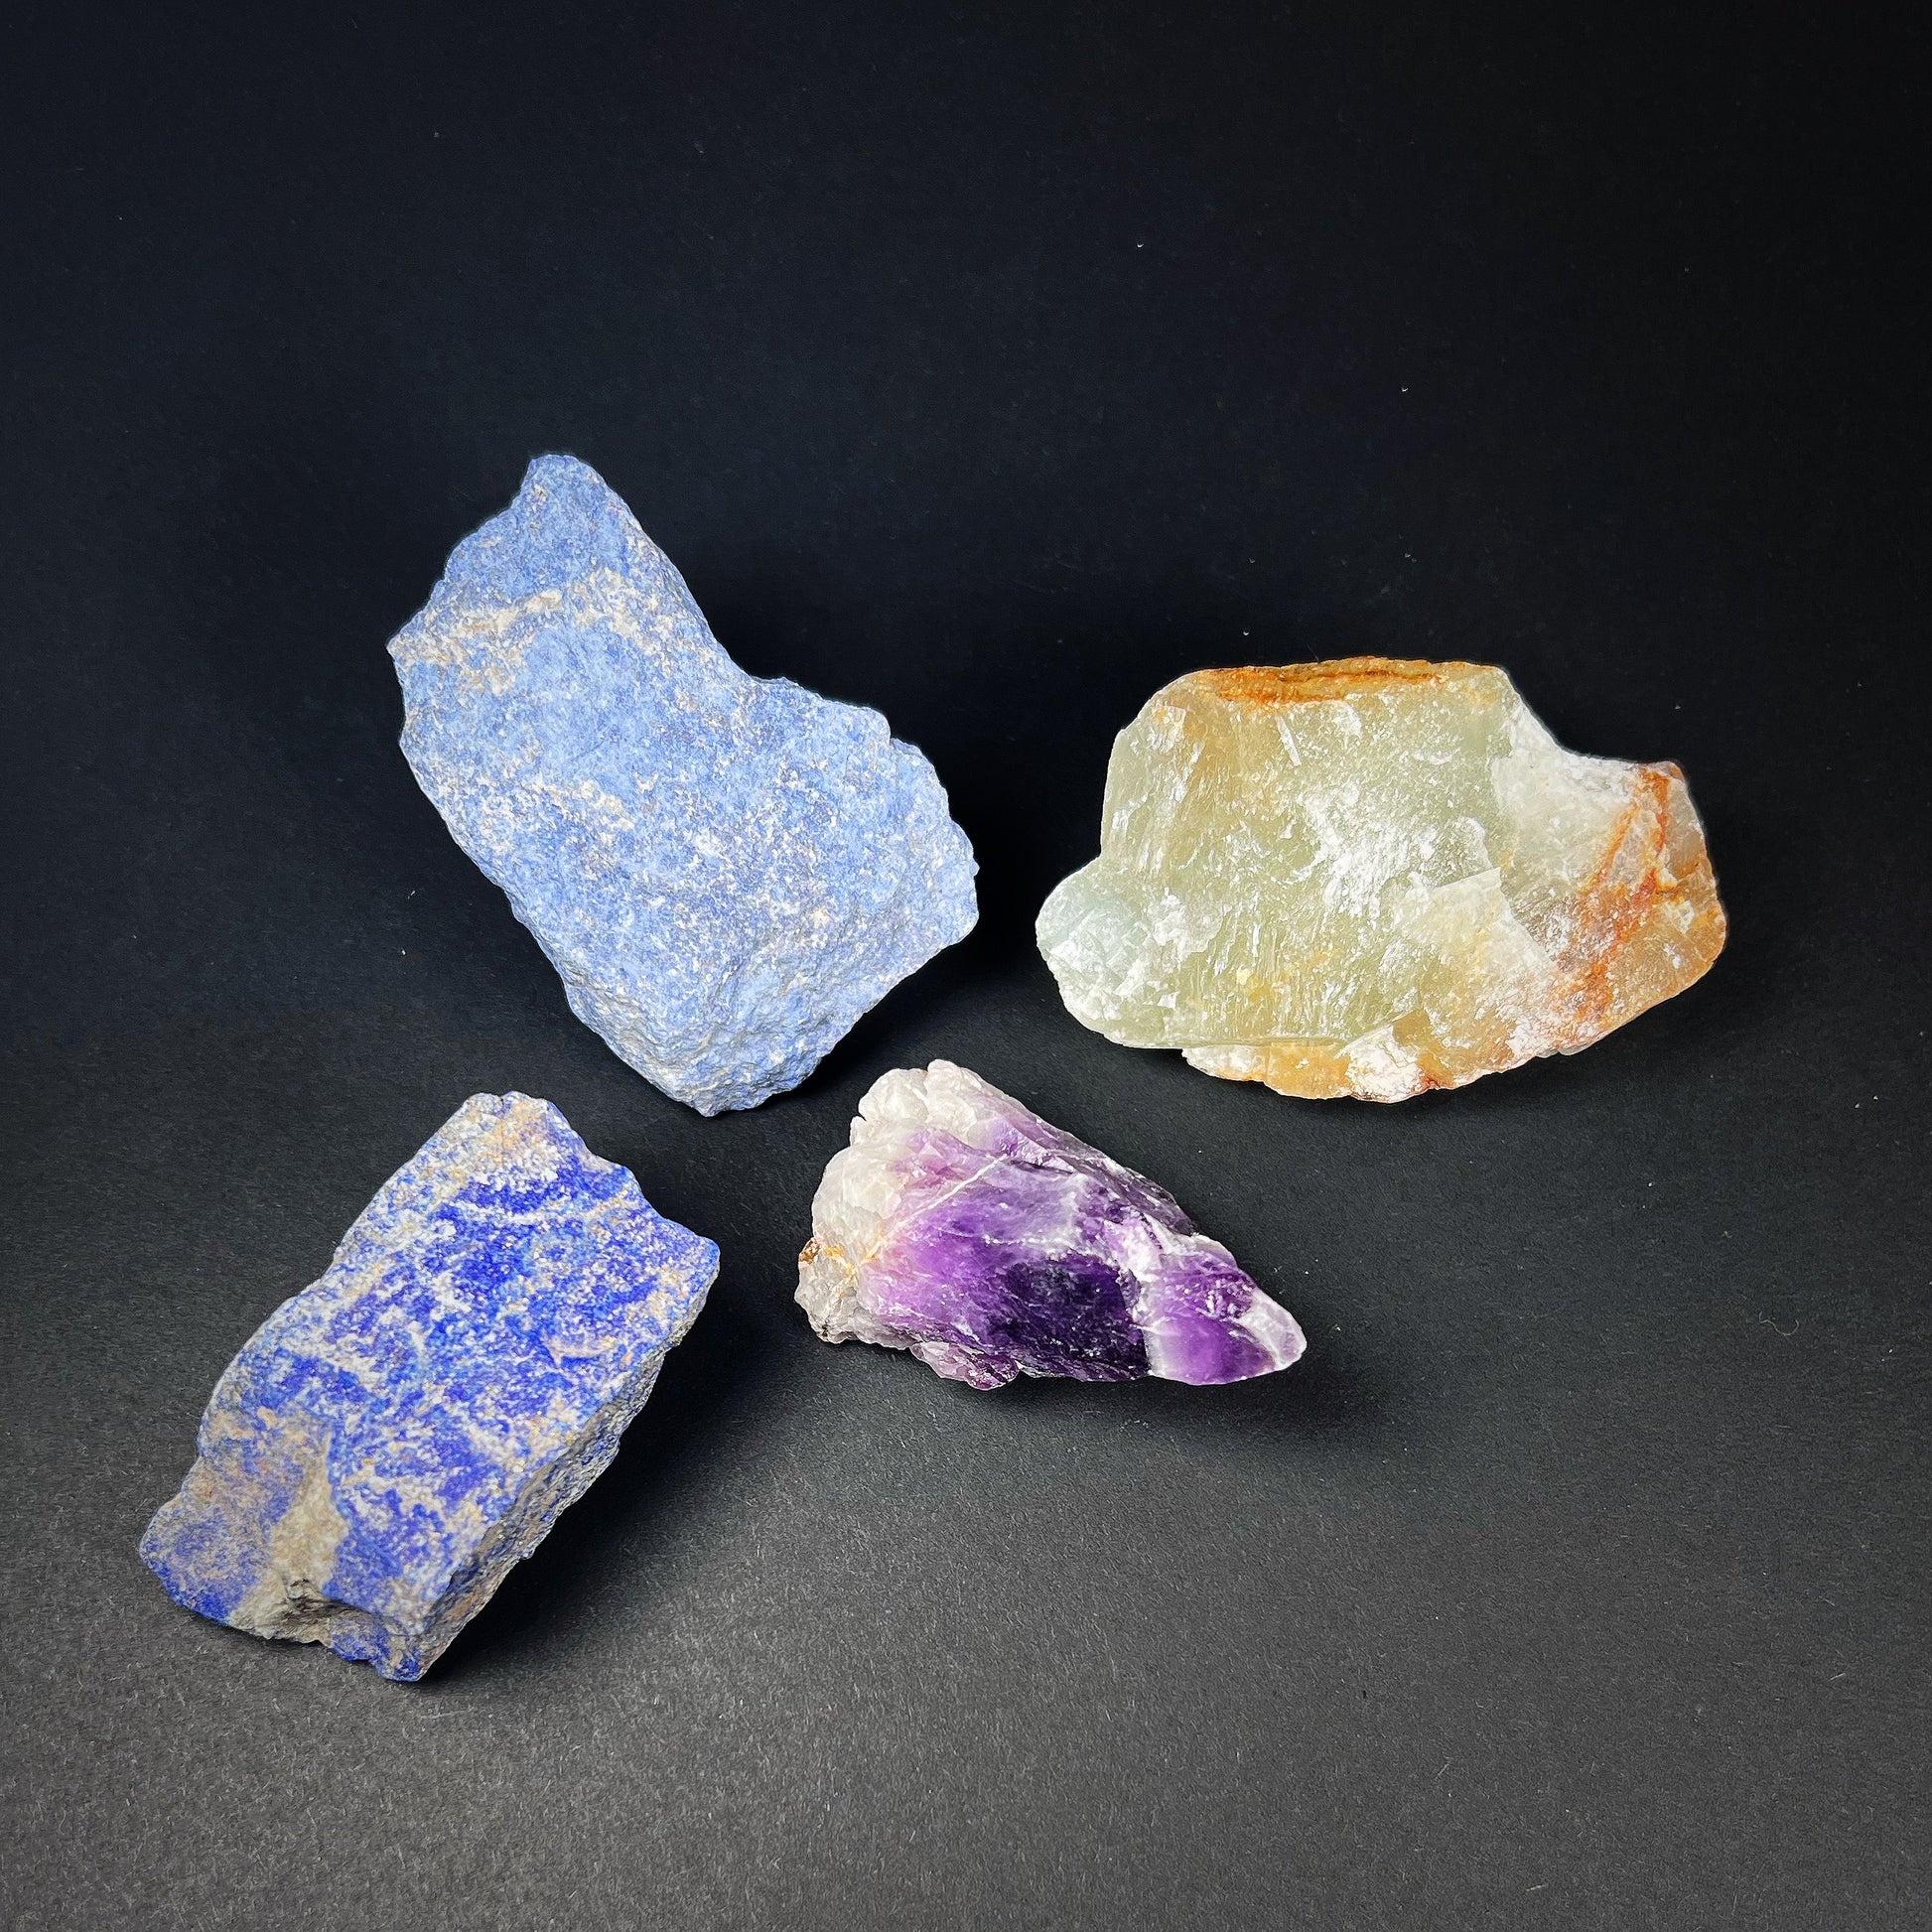 Crystal grid of four raw stones: lapis lazuli, dumortierite, chevron amethyst and blue onyx.